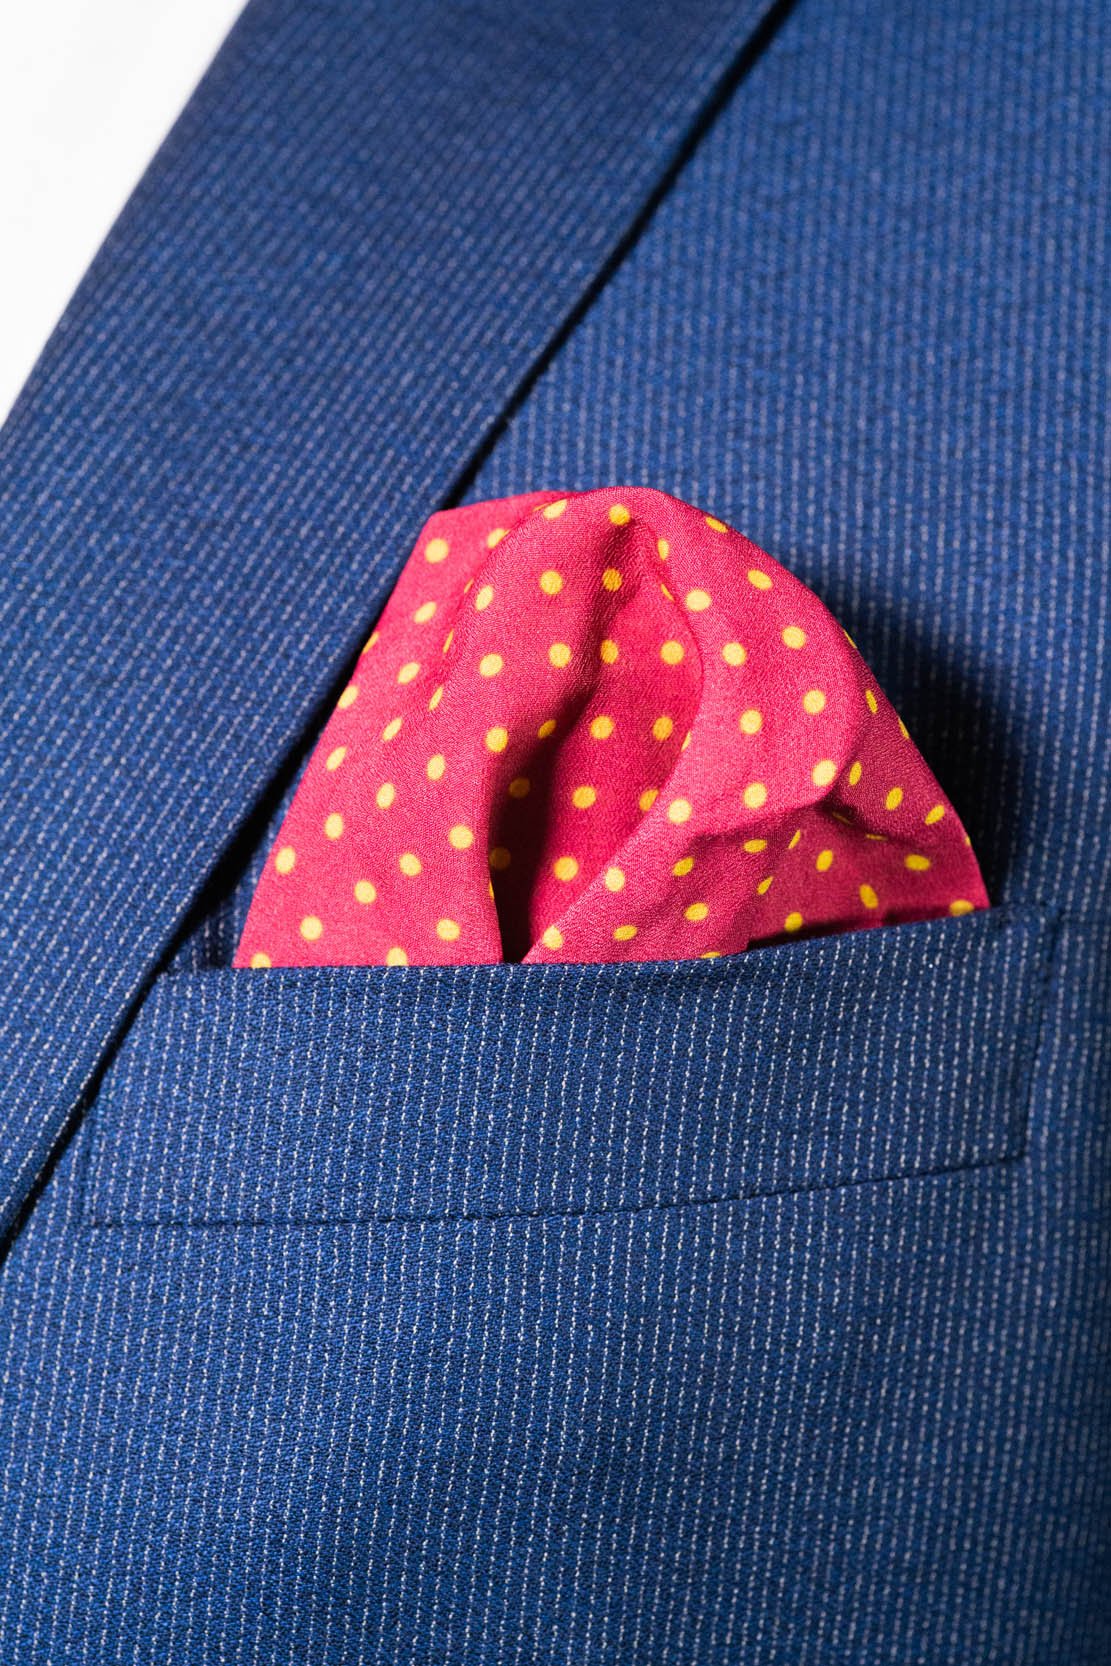 RARE CUT 's Merlot Dots Pocket Square Worn in a Suit Jacket